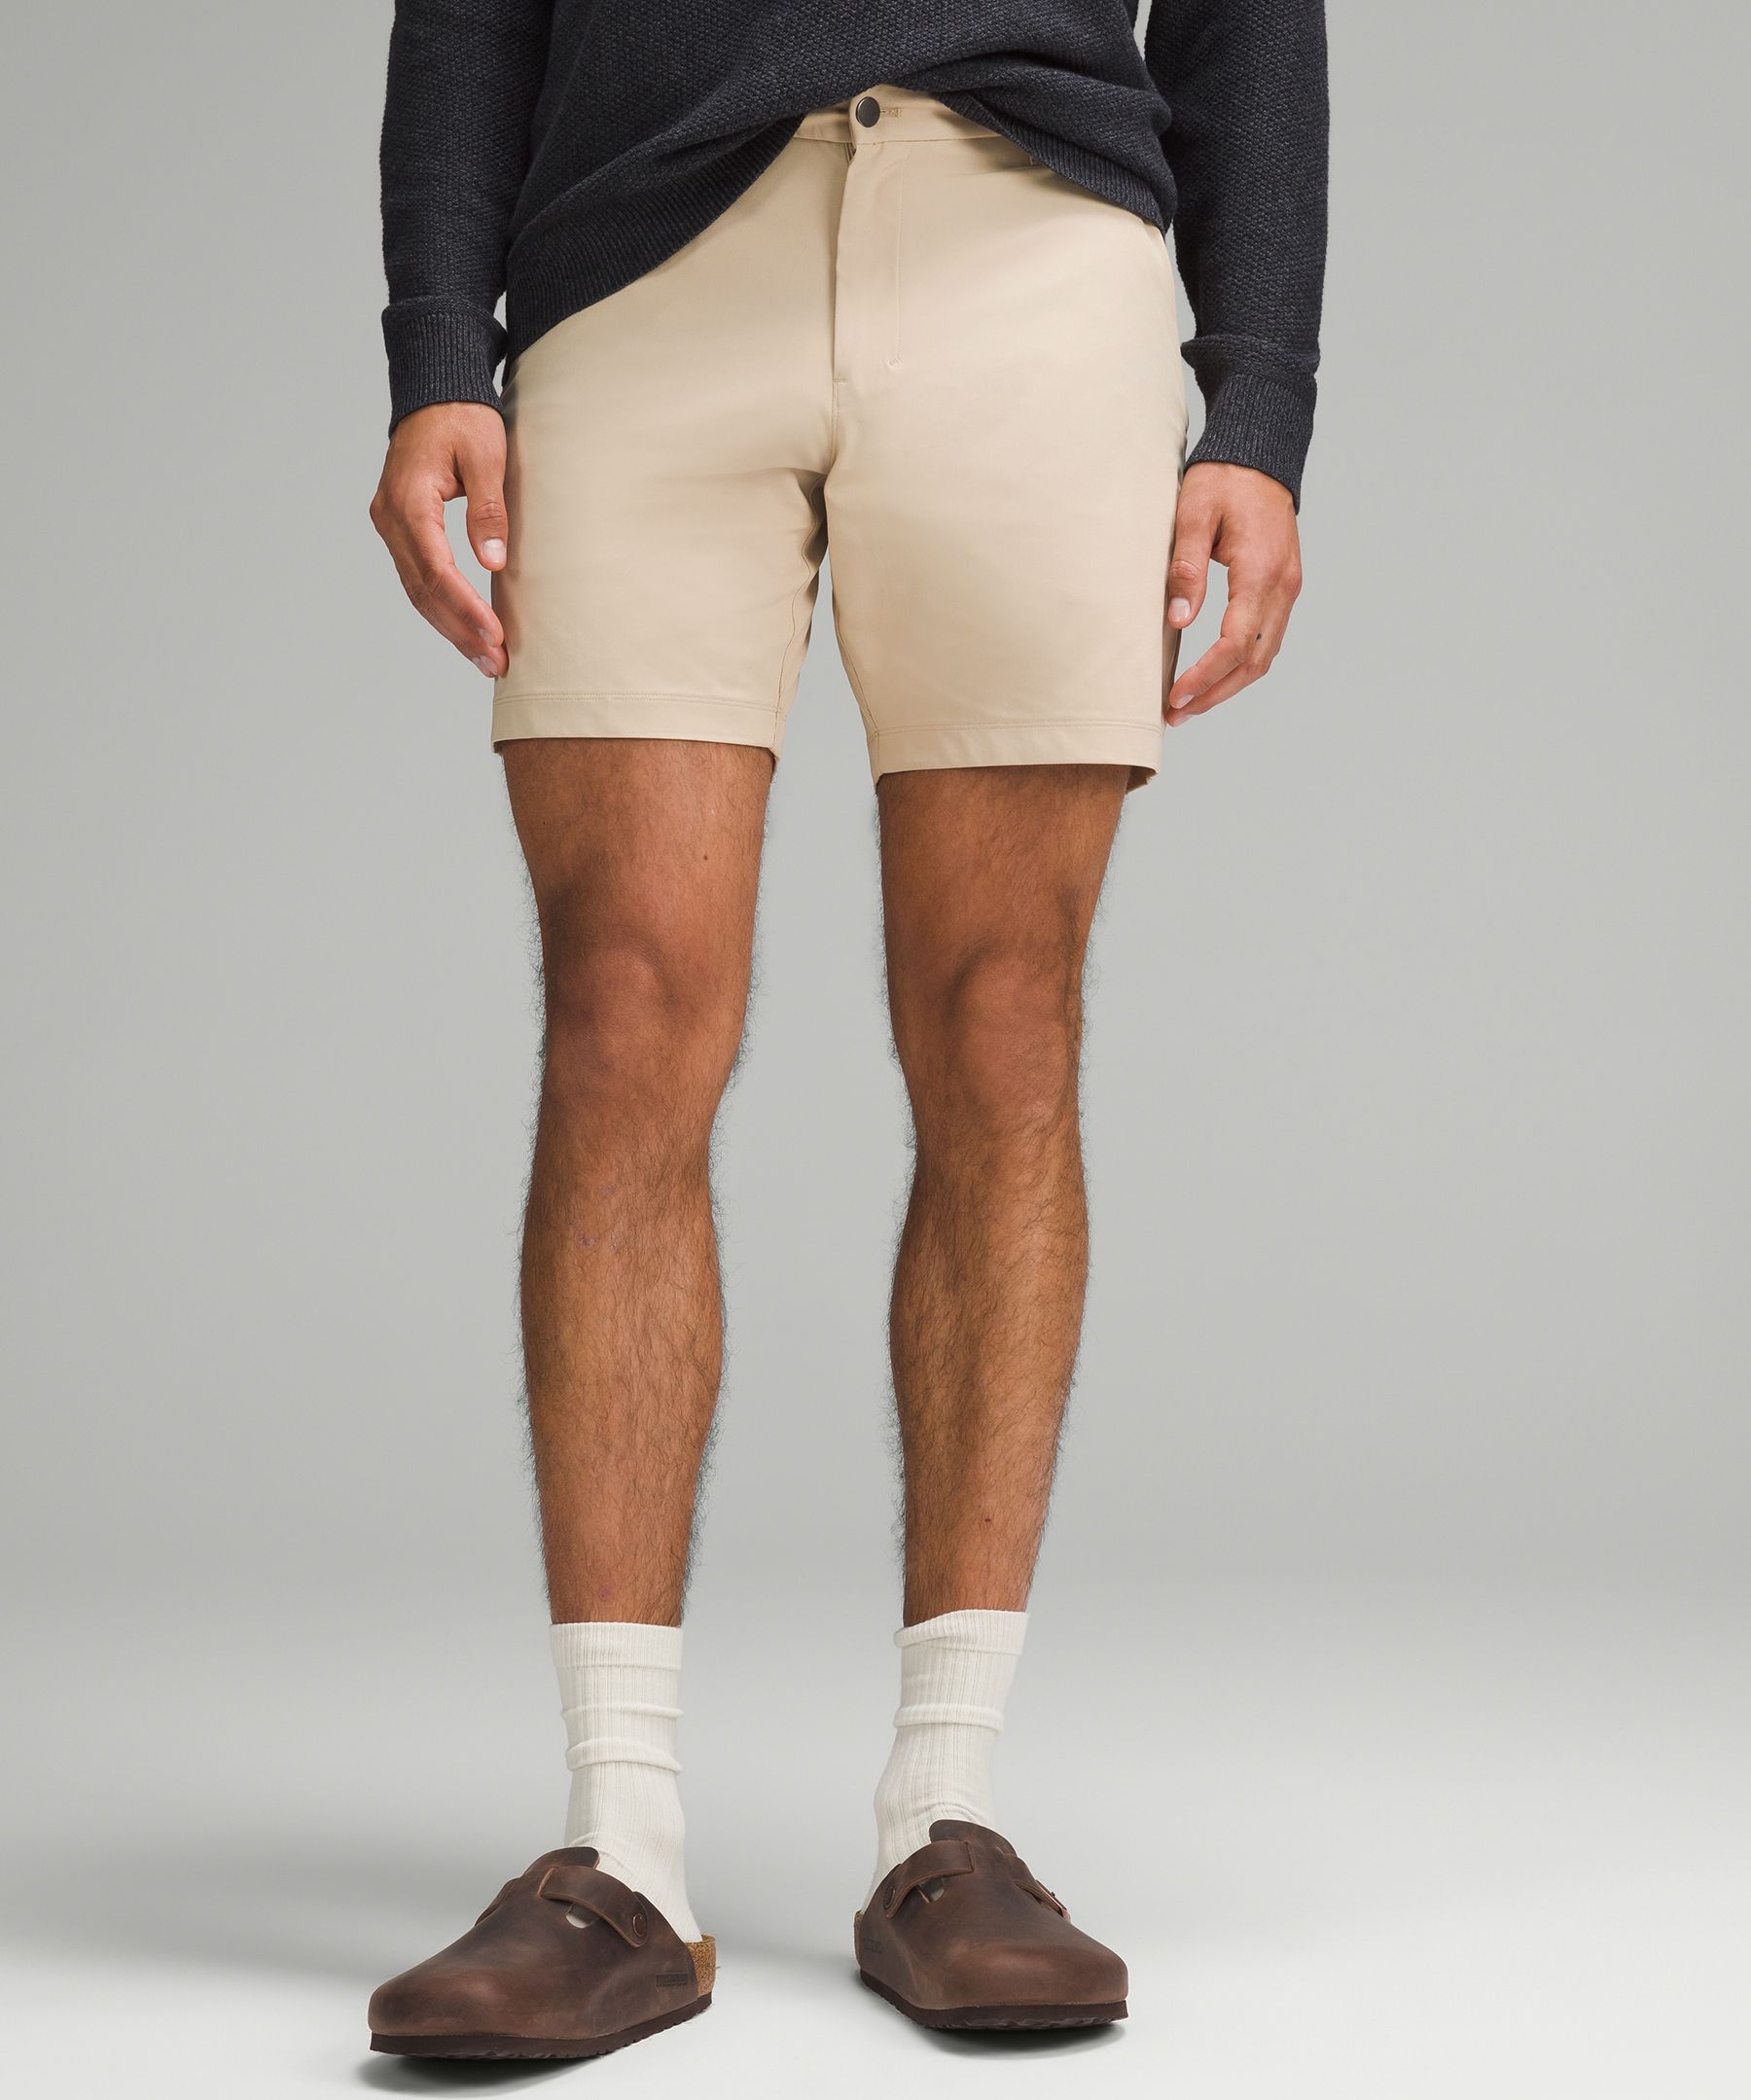 Commission Classic-Fit Short 7 *Oxford, Men's Shorts